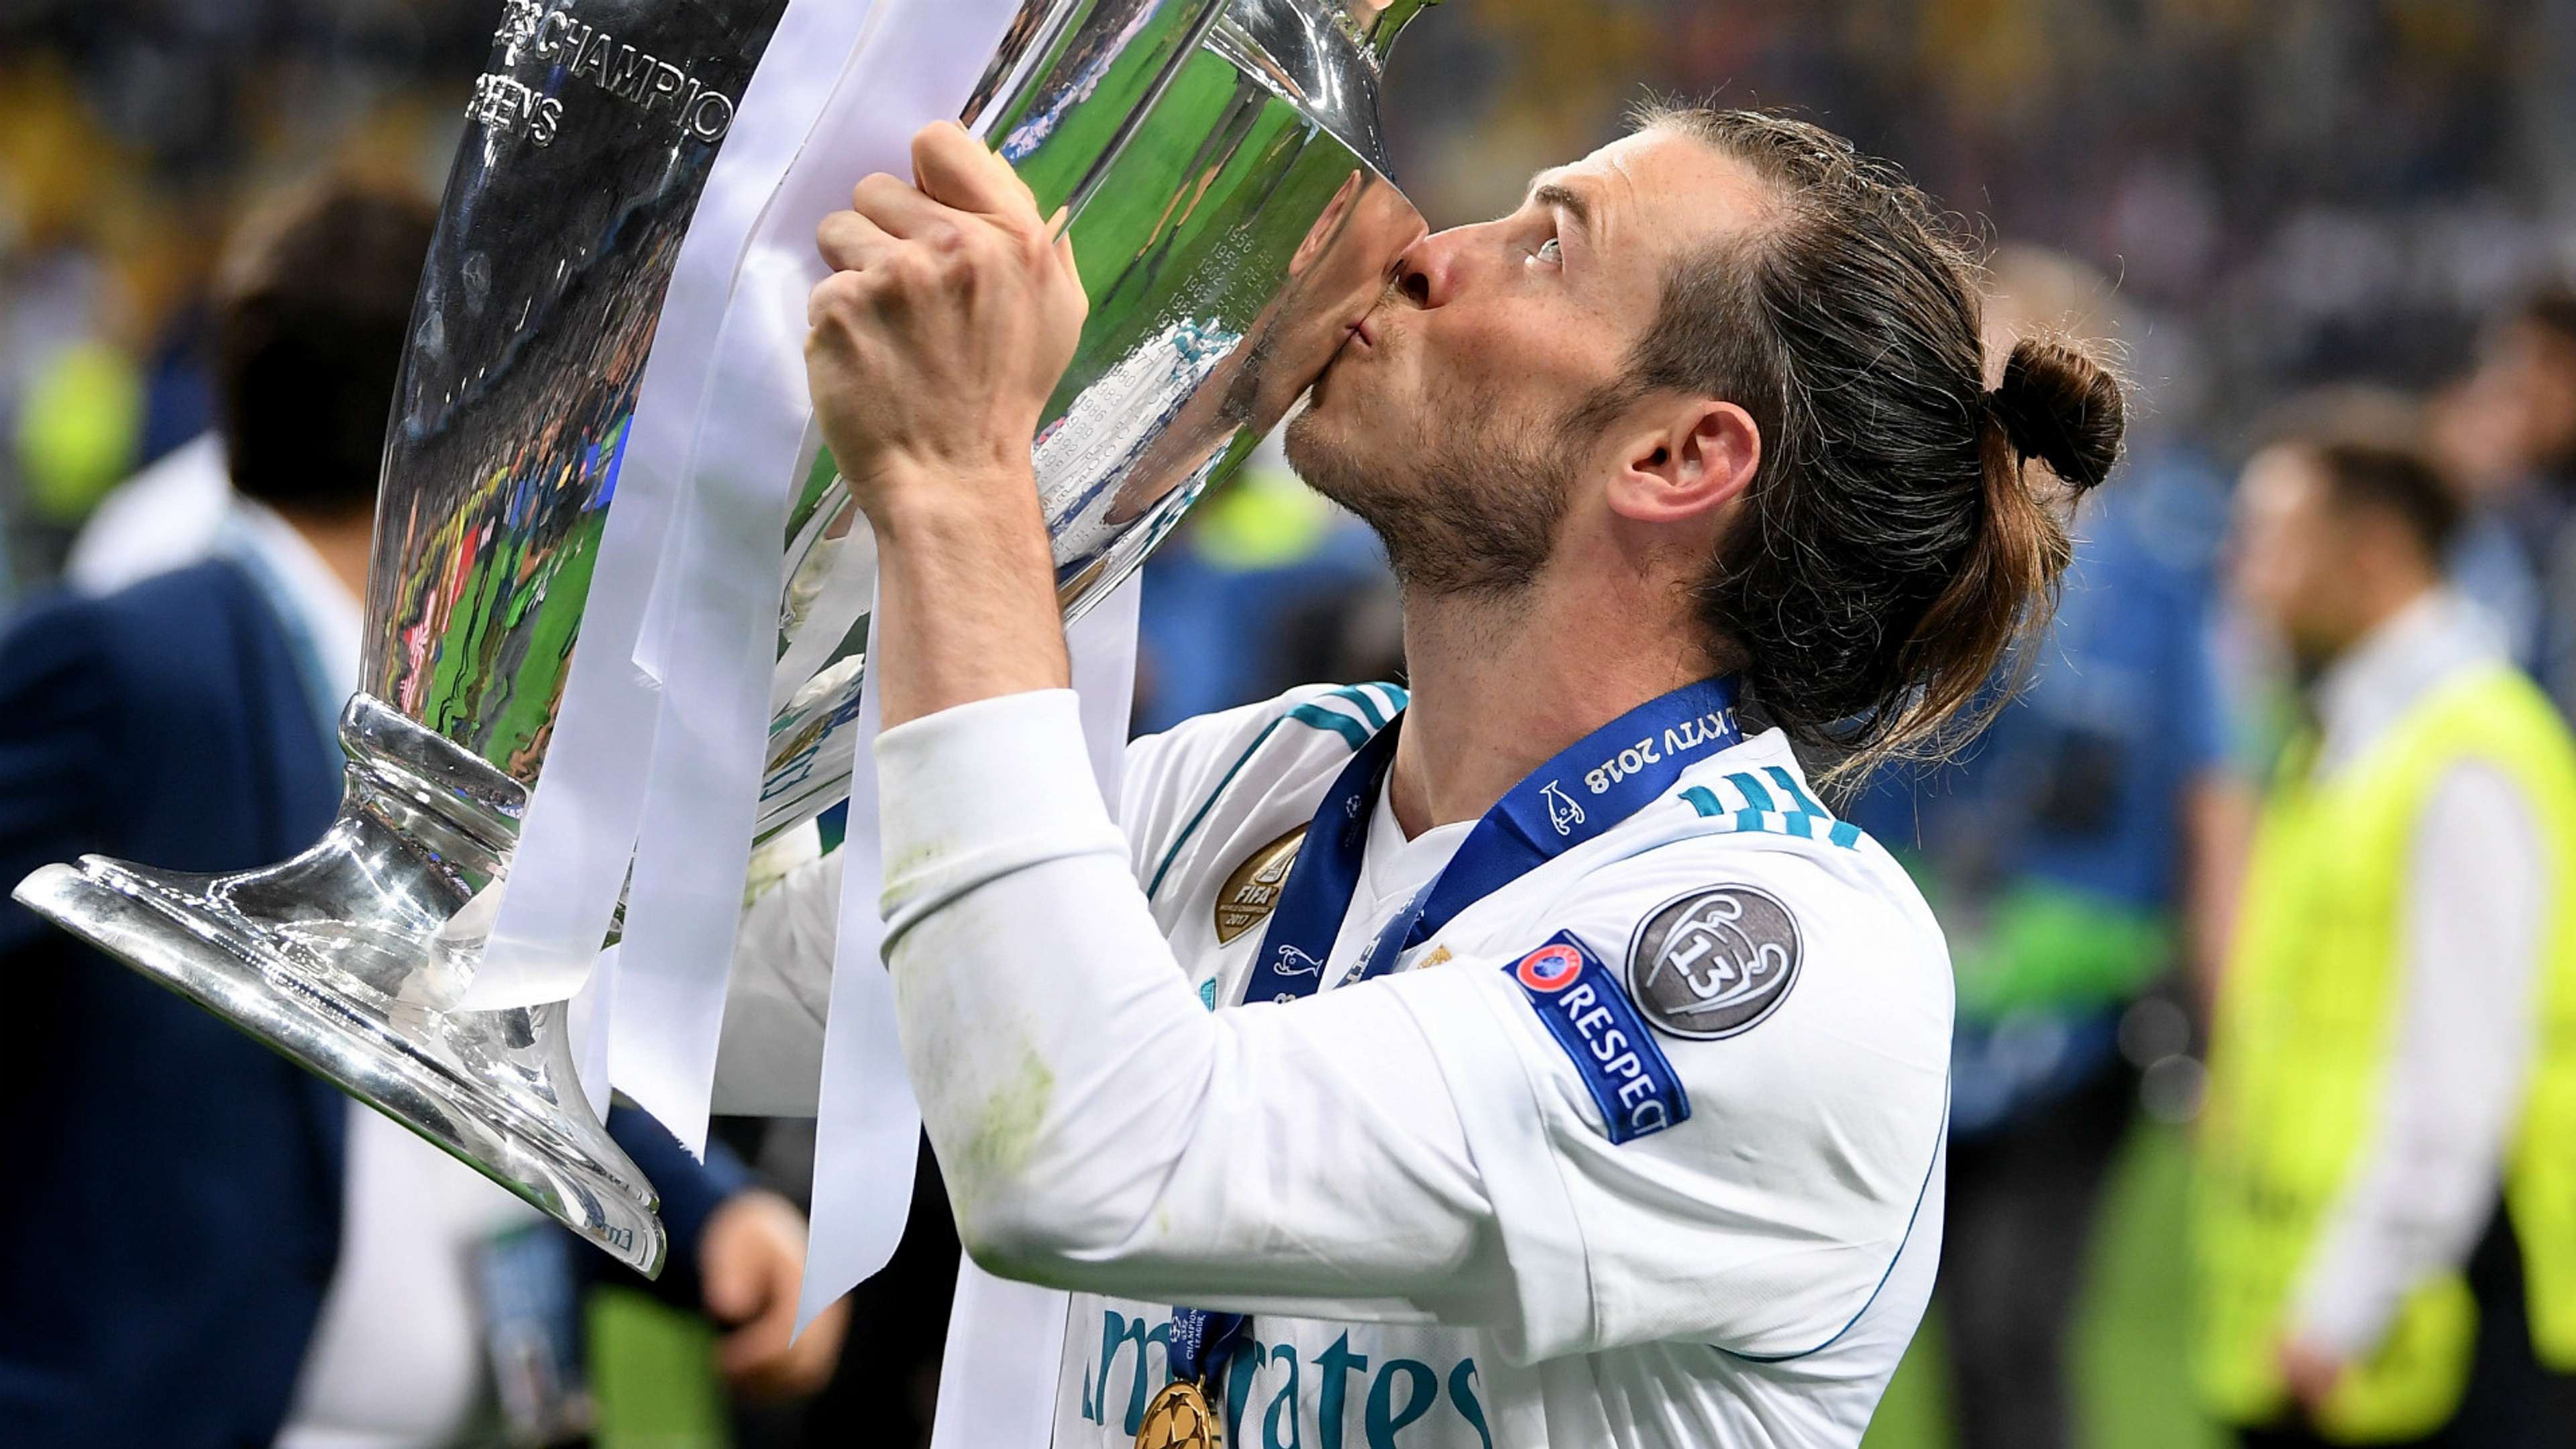 Gareth Bale Real Madrid 2017-18